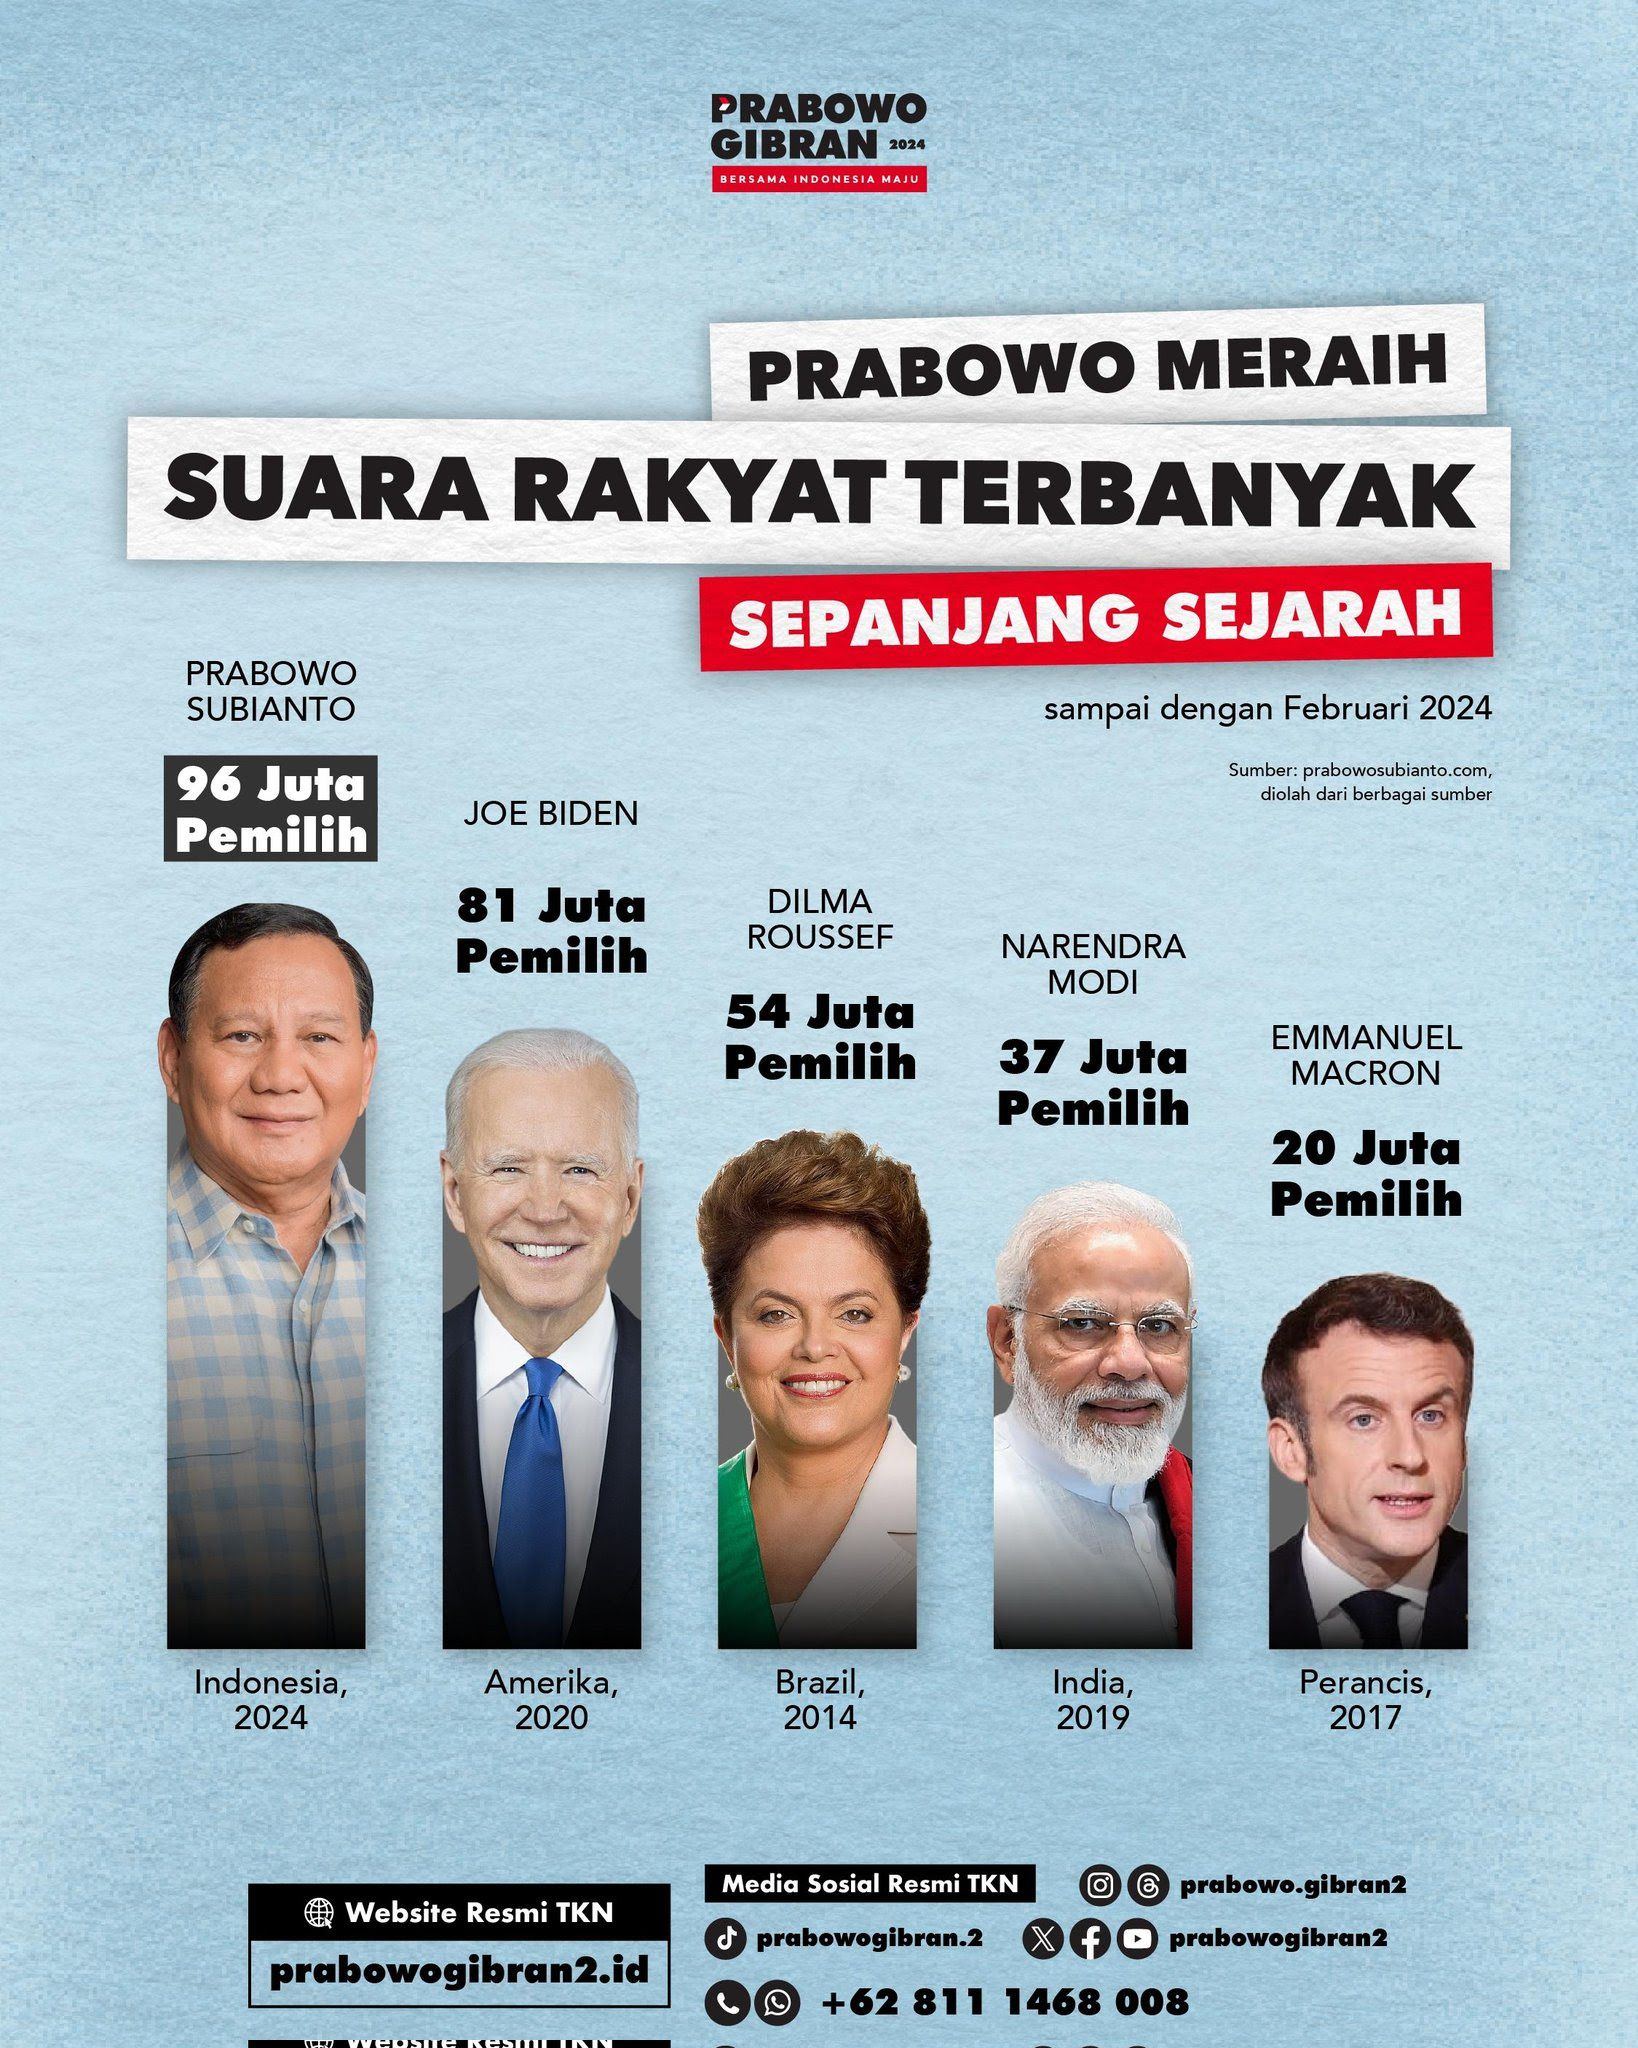 Perbandingan Jumlah Suara Prabowo dan Pemimpin Negara Lainnya dalam Pemilu di Negara Masing-masing. /Twitter/@prabowogibran2